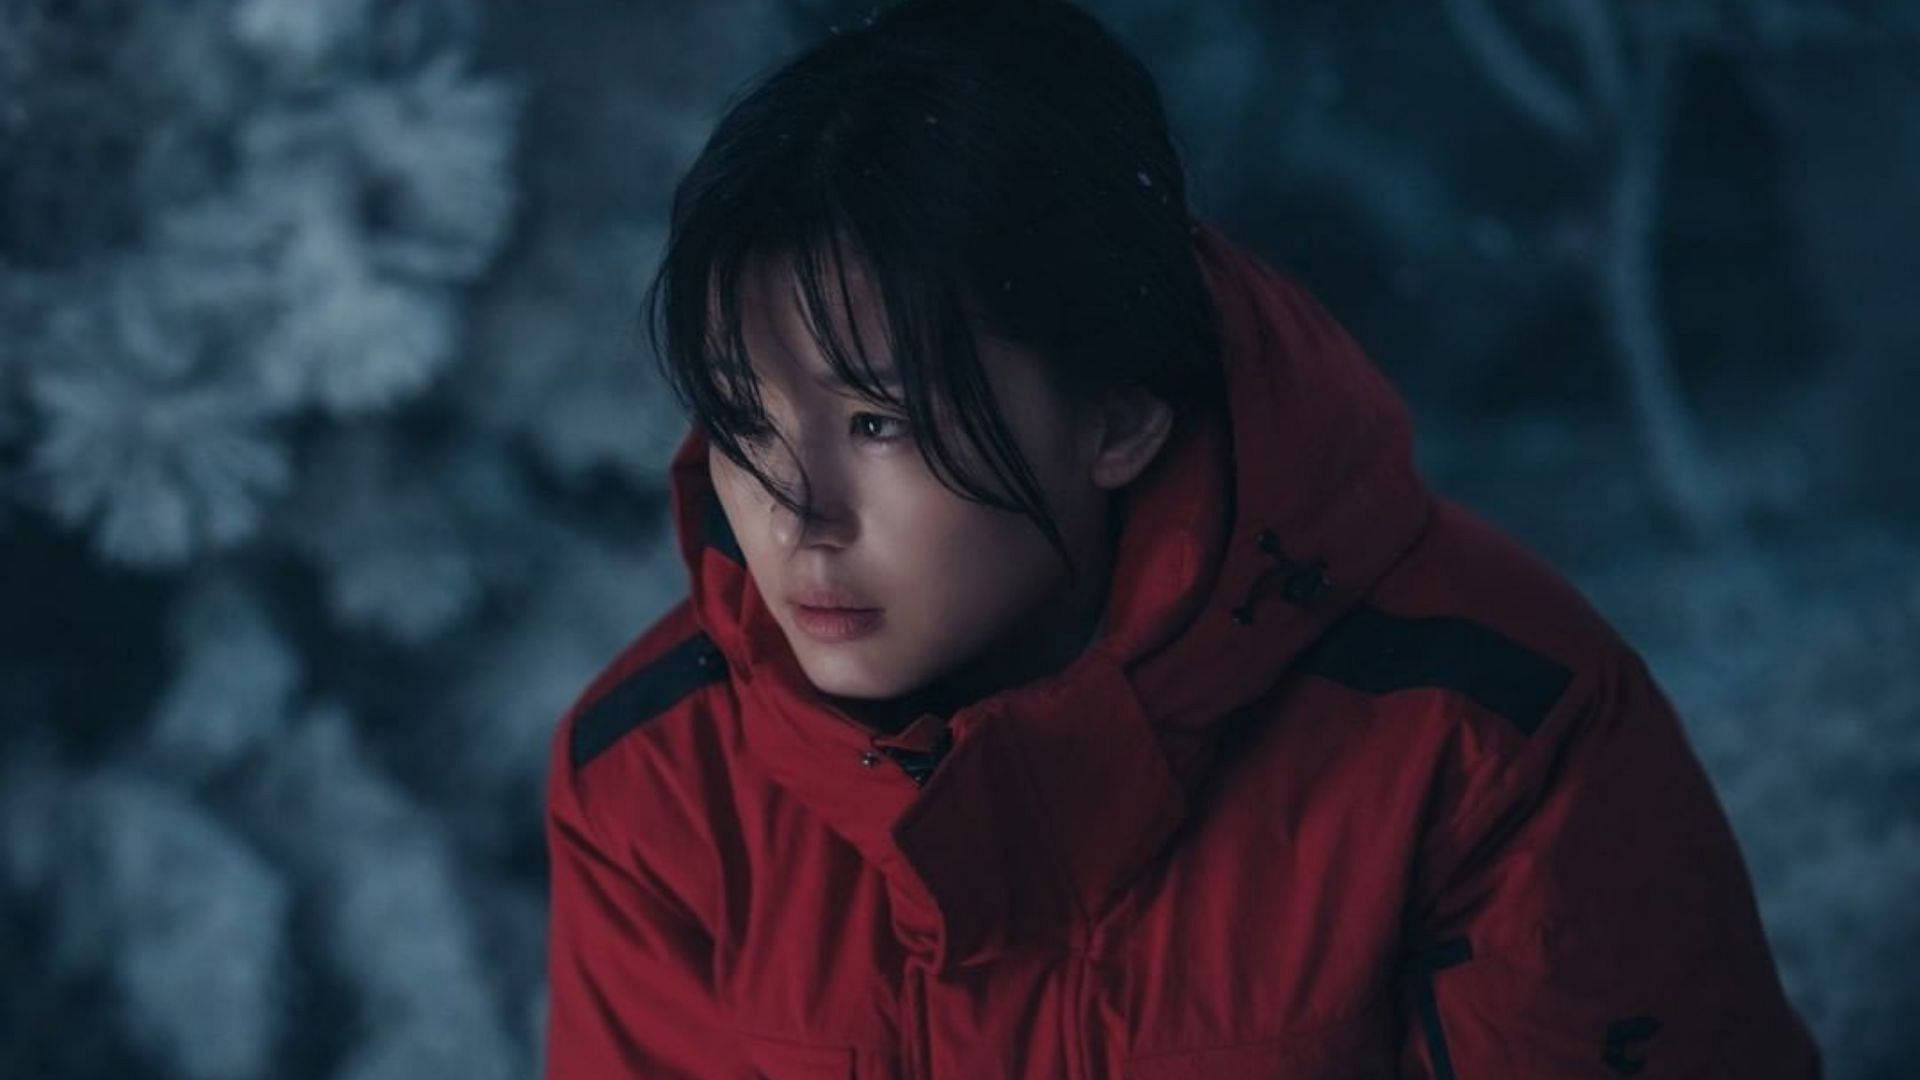 Jun Ji Hyun Gracing Cold Winter Weather Background